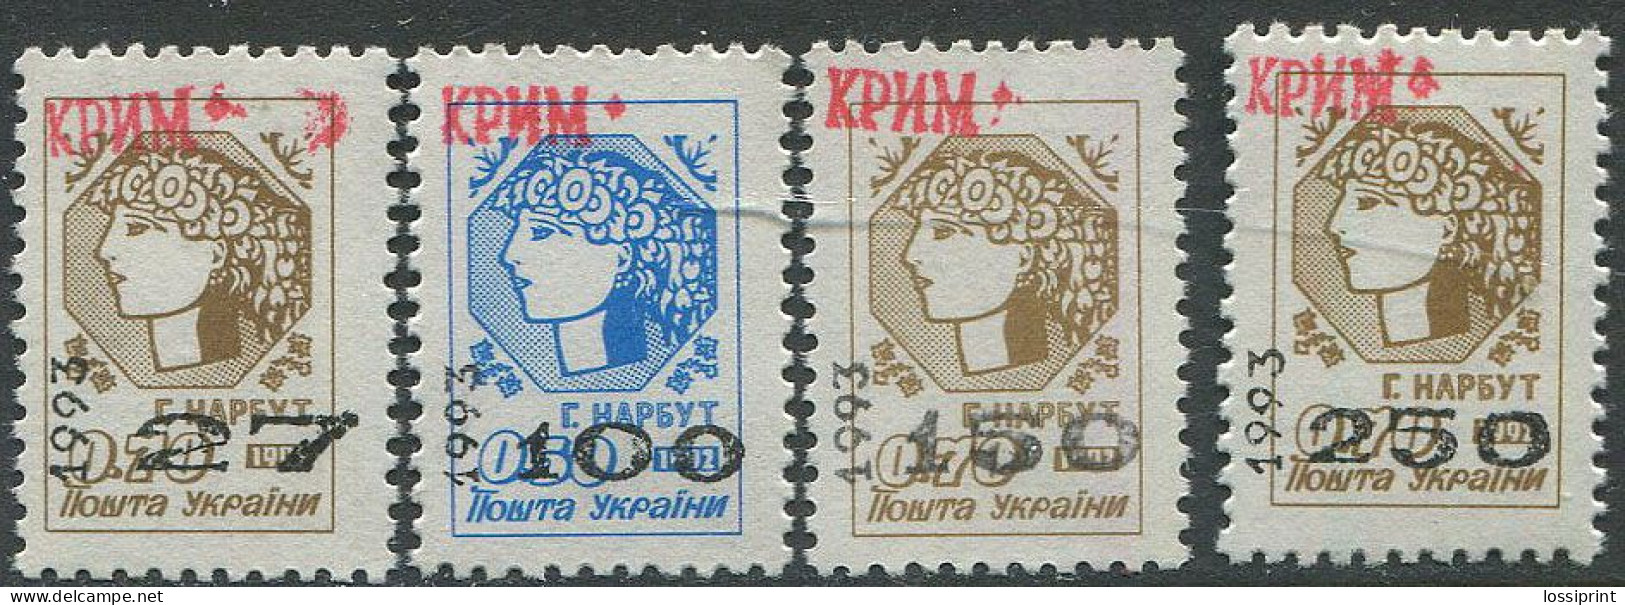 Ukraina:Ukraine:Unused Overprinted Stamps Serie, Krim Peninsula, 1993, MNH - Ukraine